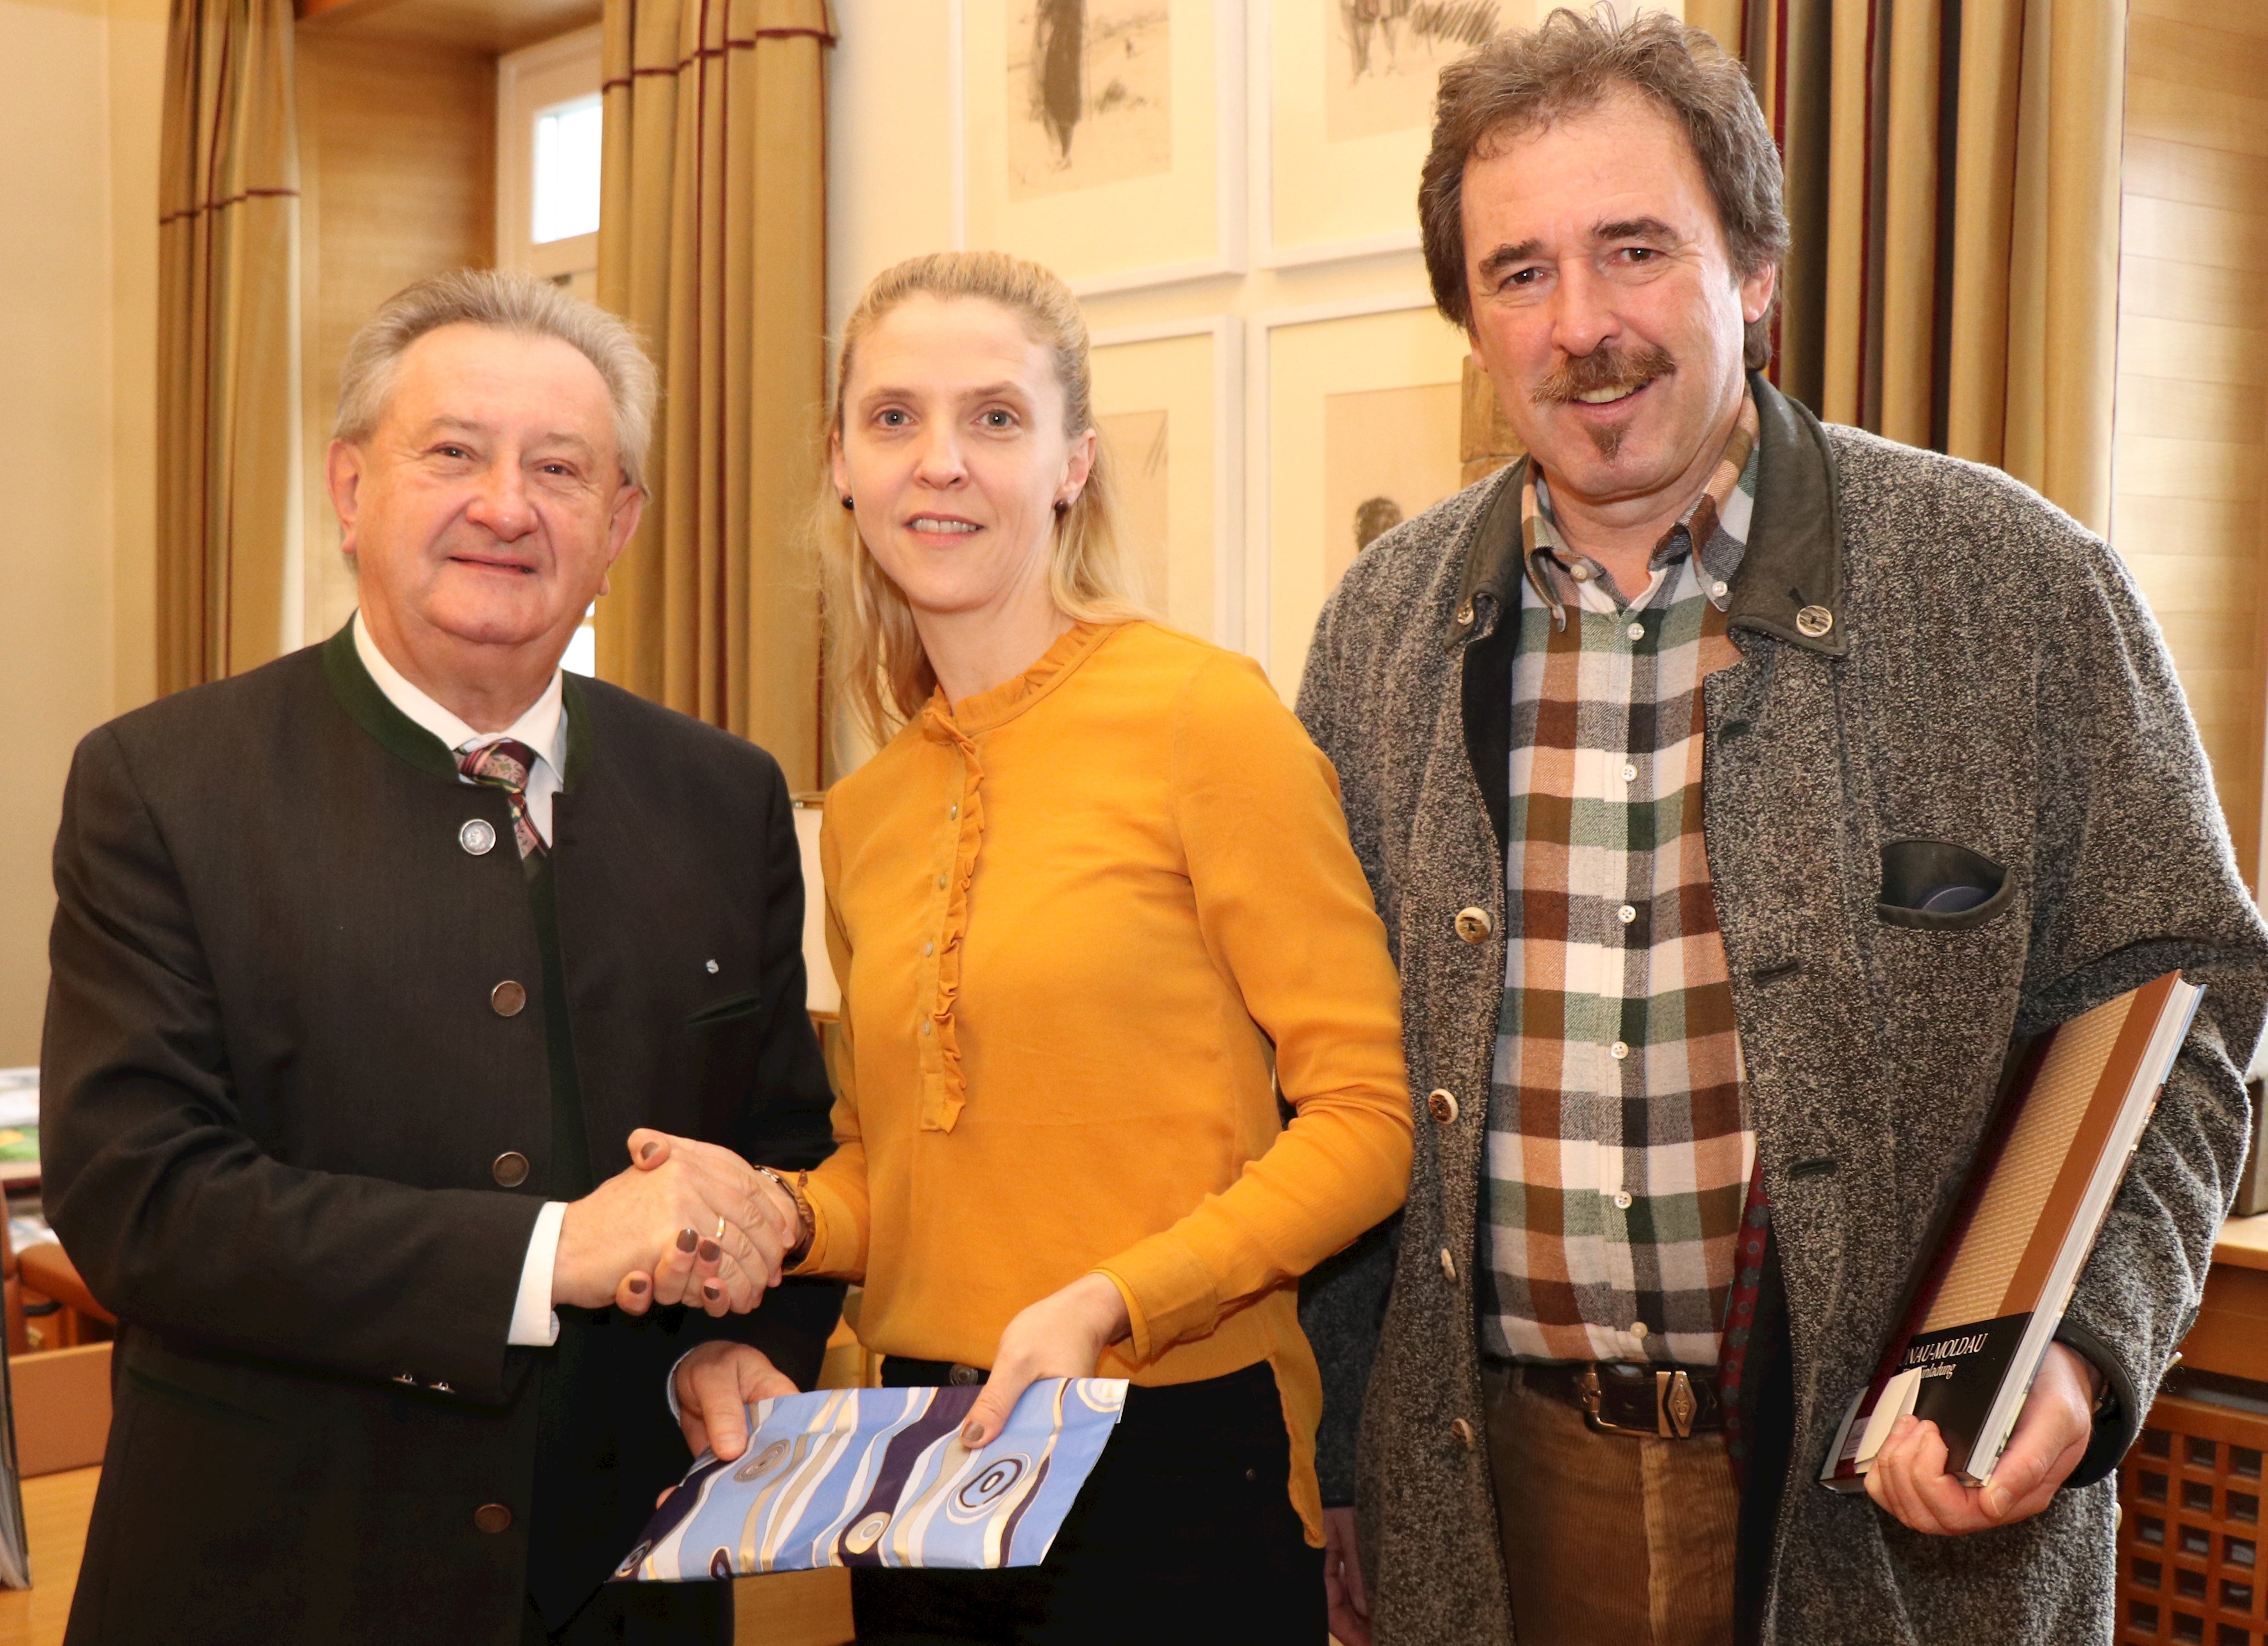 Auf Ortner folgt Ortner: Doris Ortner (Mitte) übernimmt ab Januar 2020 die Geschäftsführung des VdK-Kreisverbands Passau von Klaus Ortner (r.). Dazu gratulierte Landrat Franz Meyer (l.).